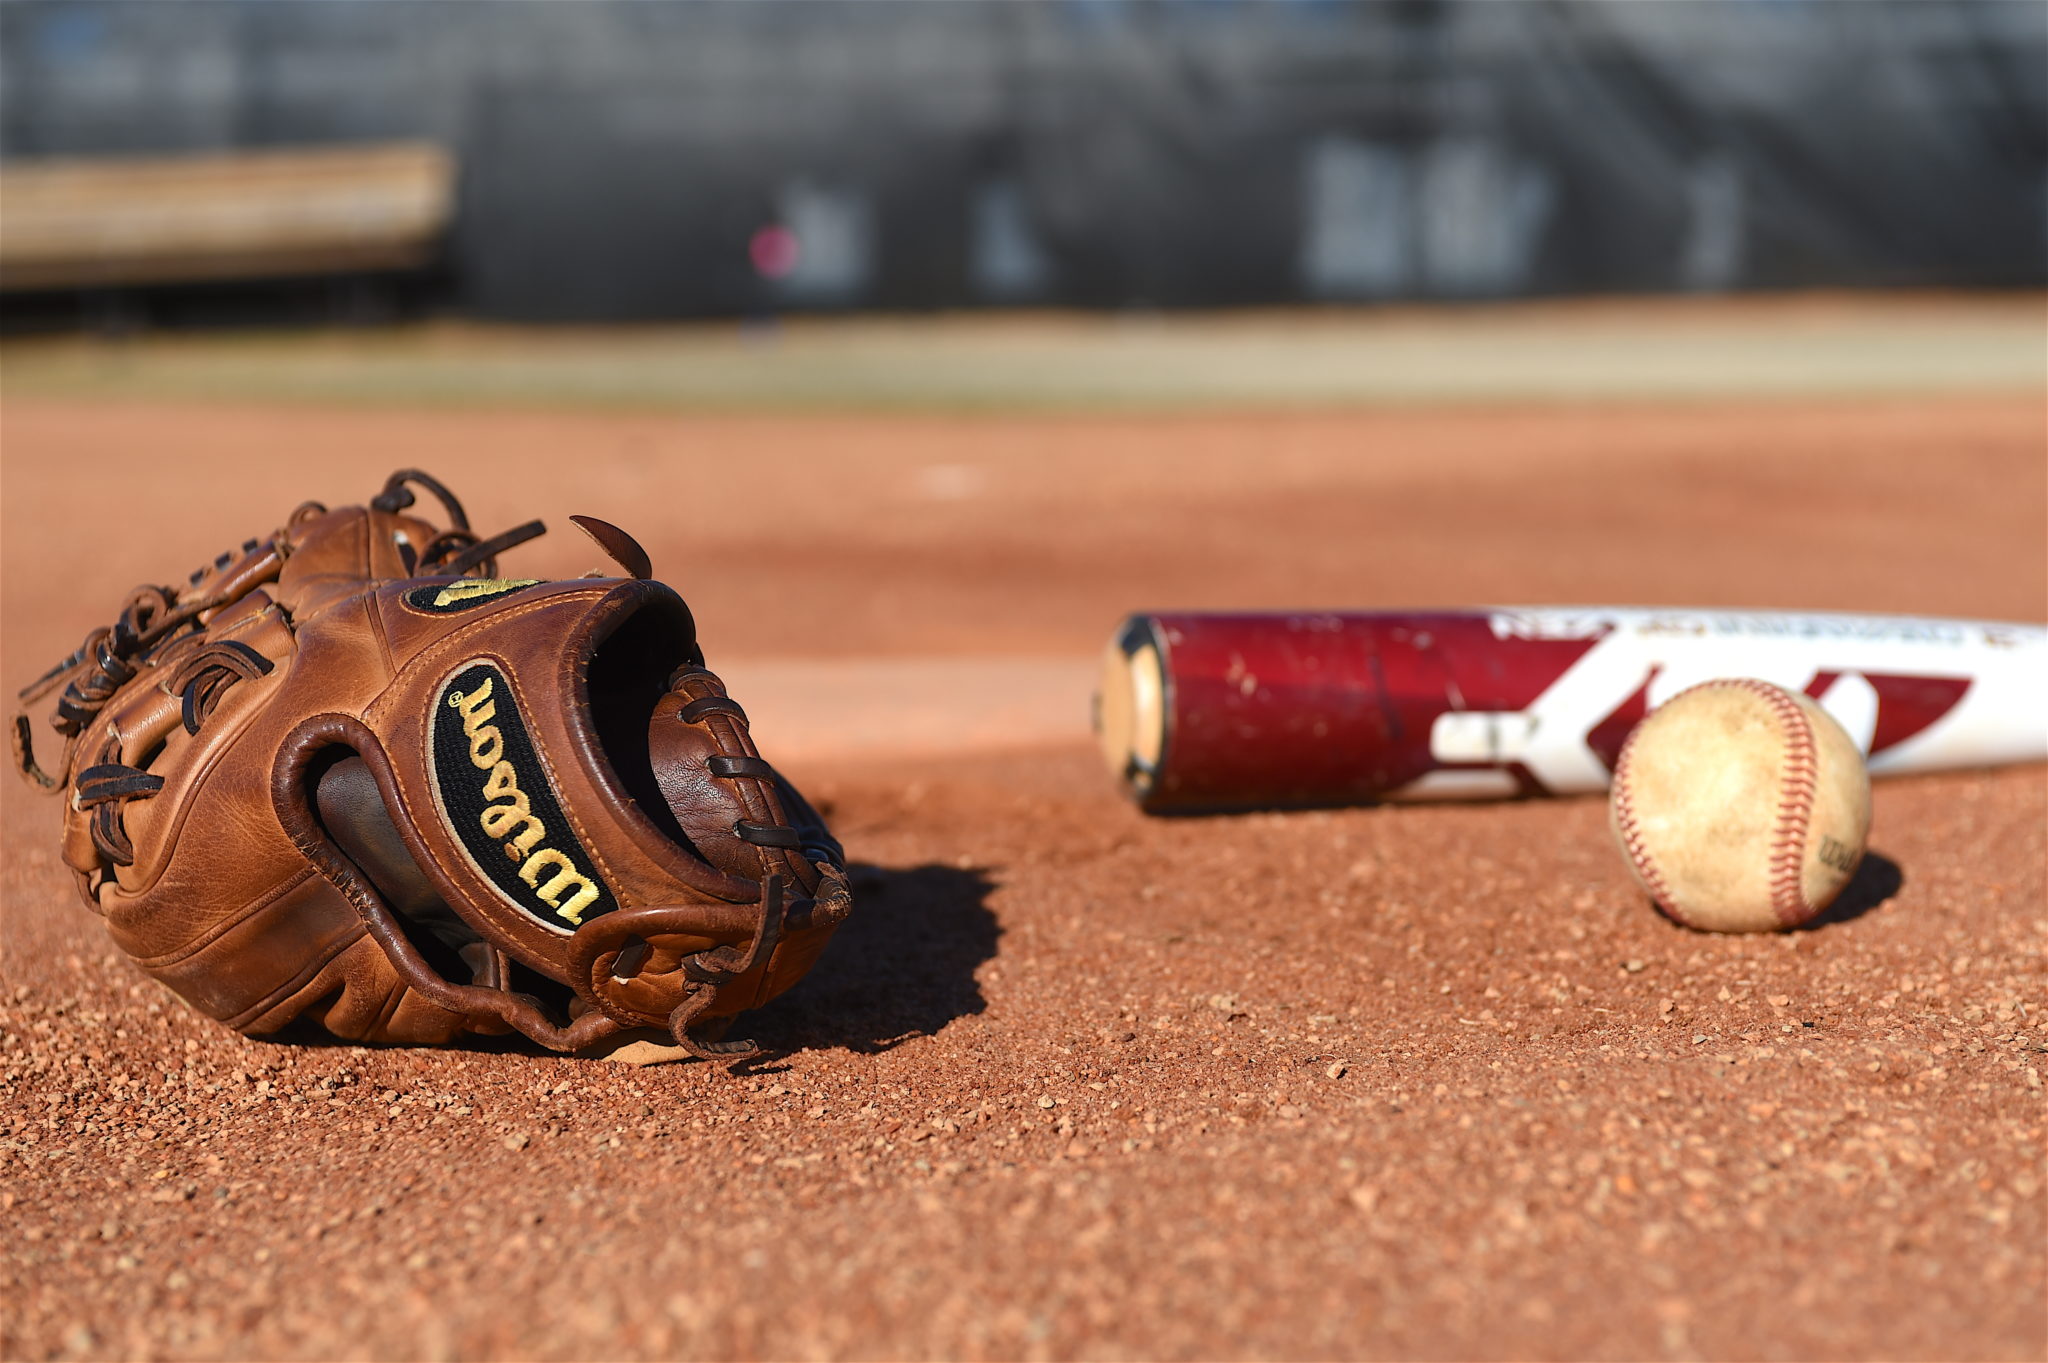 Baseball: Trojans release spring 2020 schedule - Fayetteville Technical